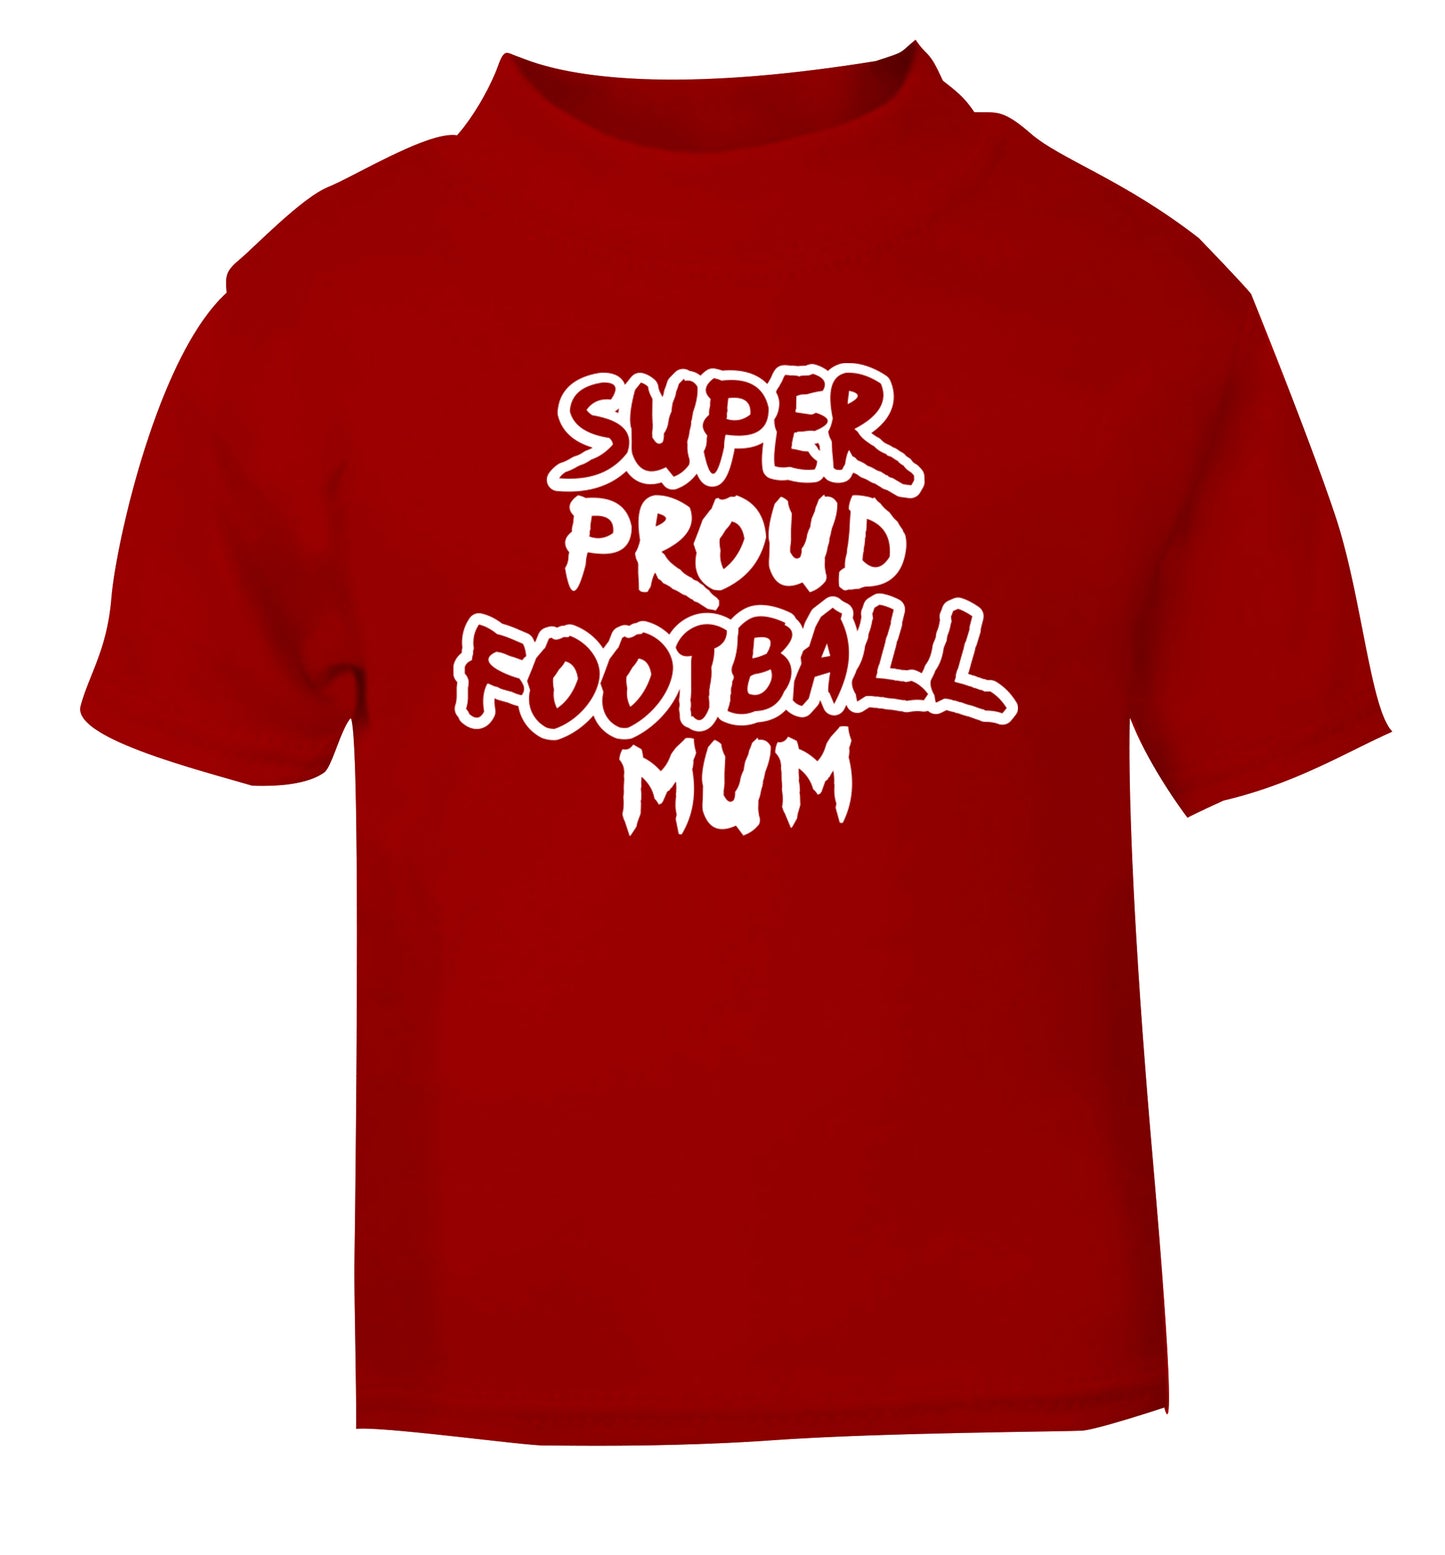 Super proud football mum red Baby Toddler Tshirt 2 Years